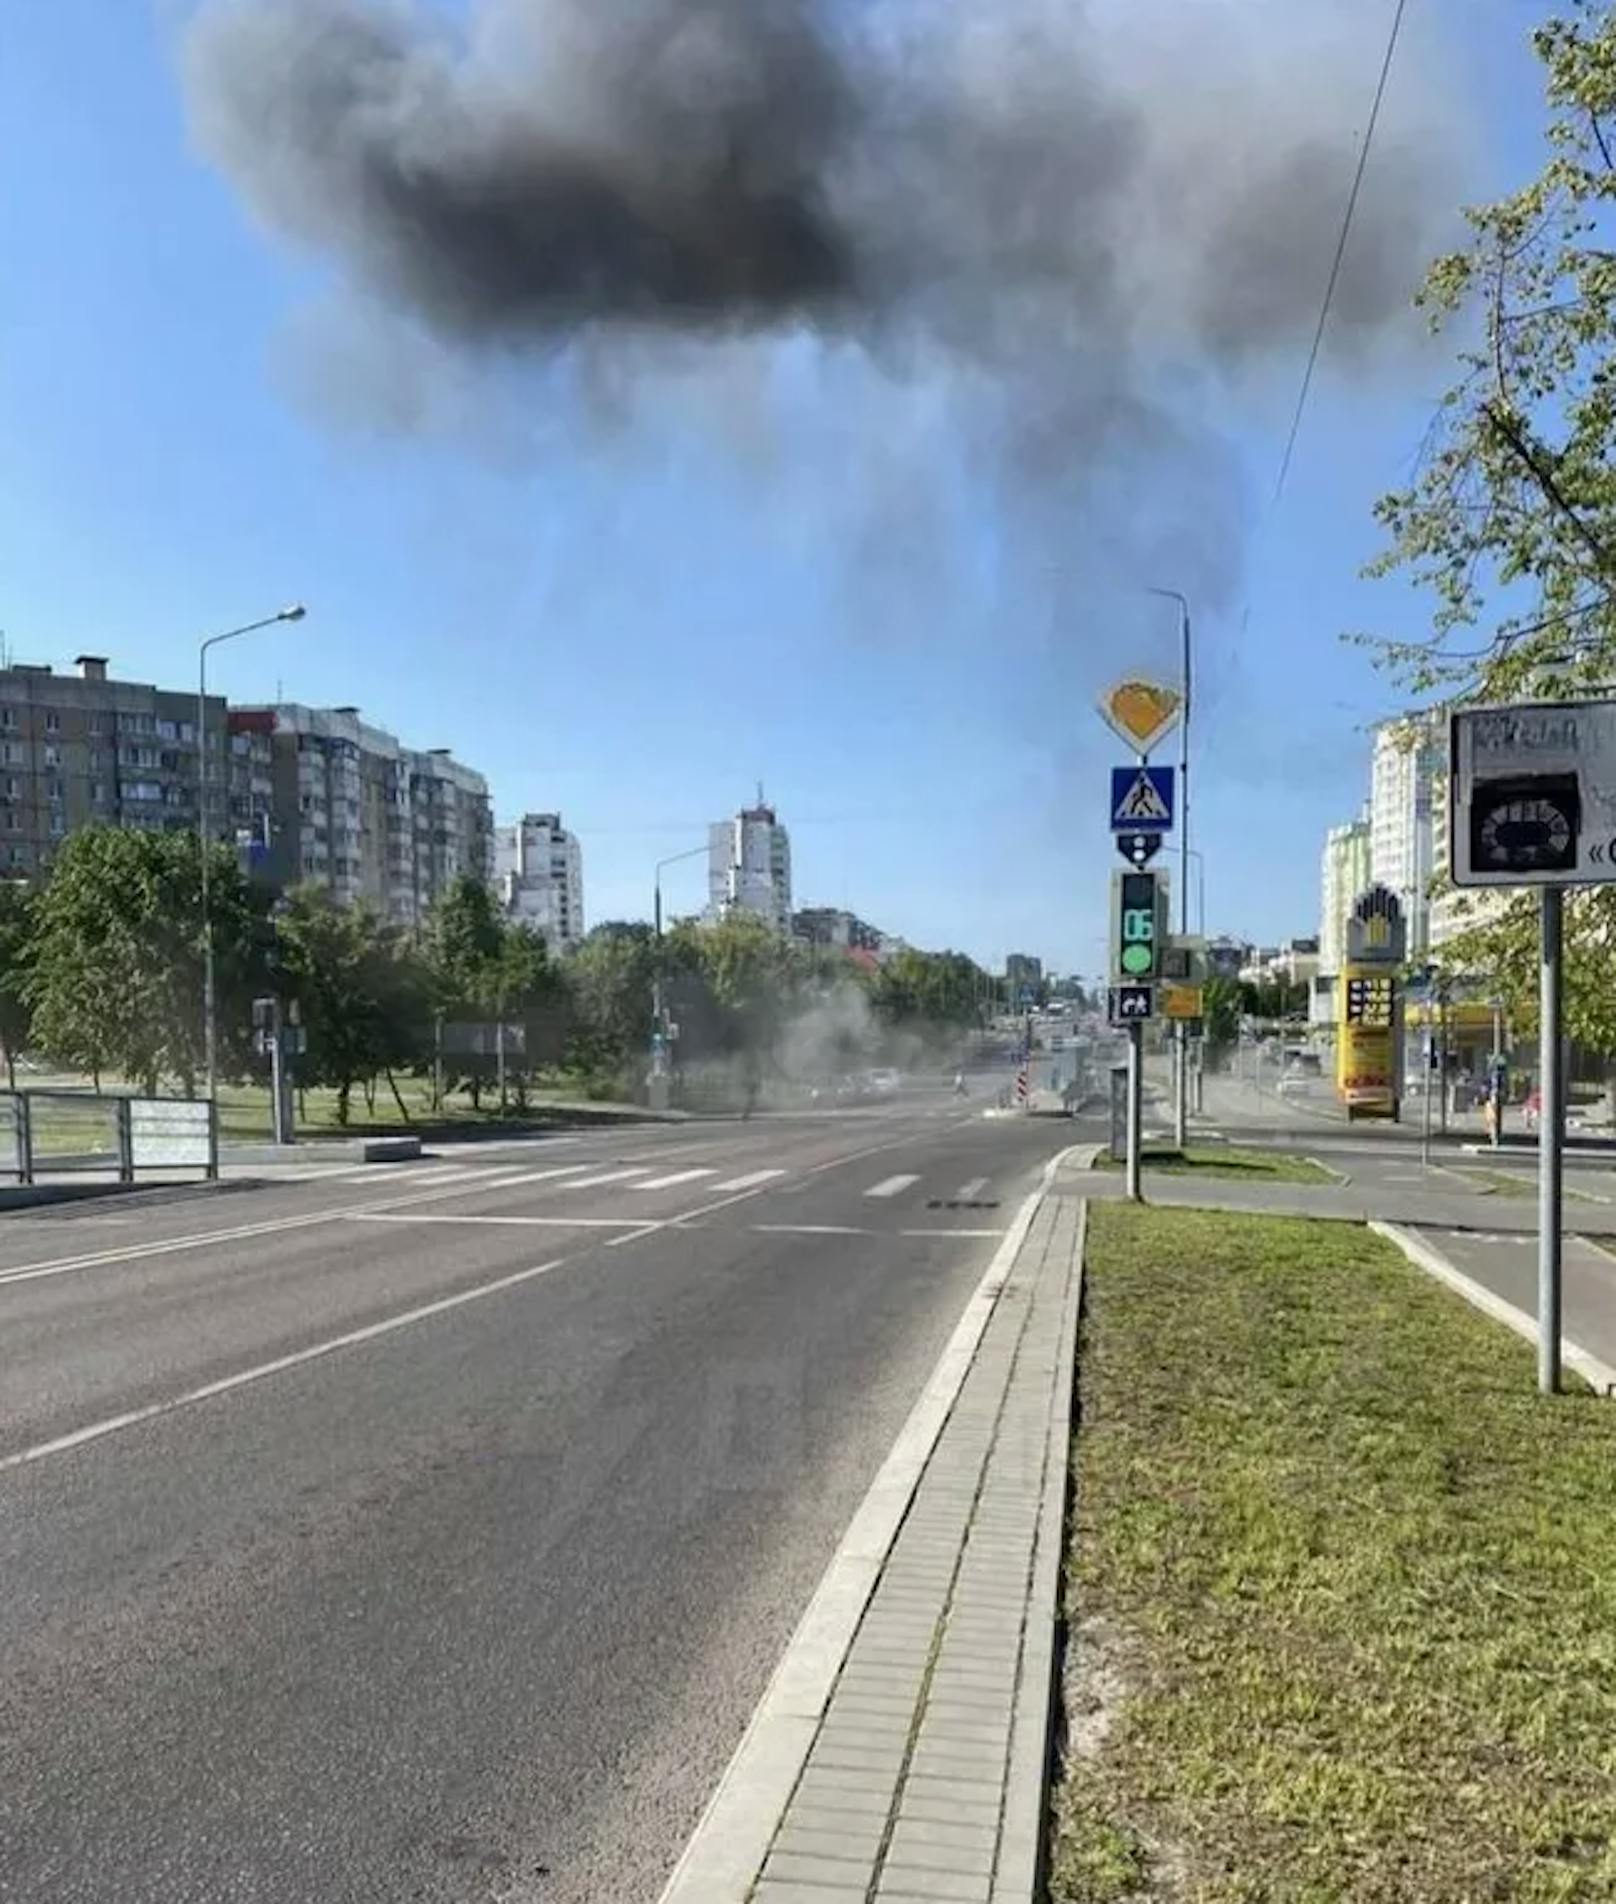 Rauch steigt in Belgorod in den Himmel.